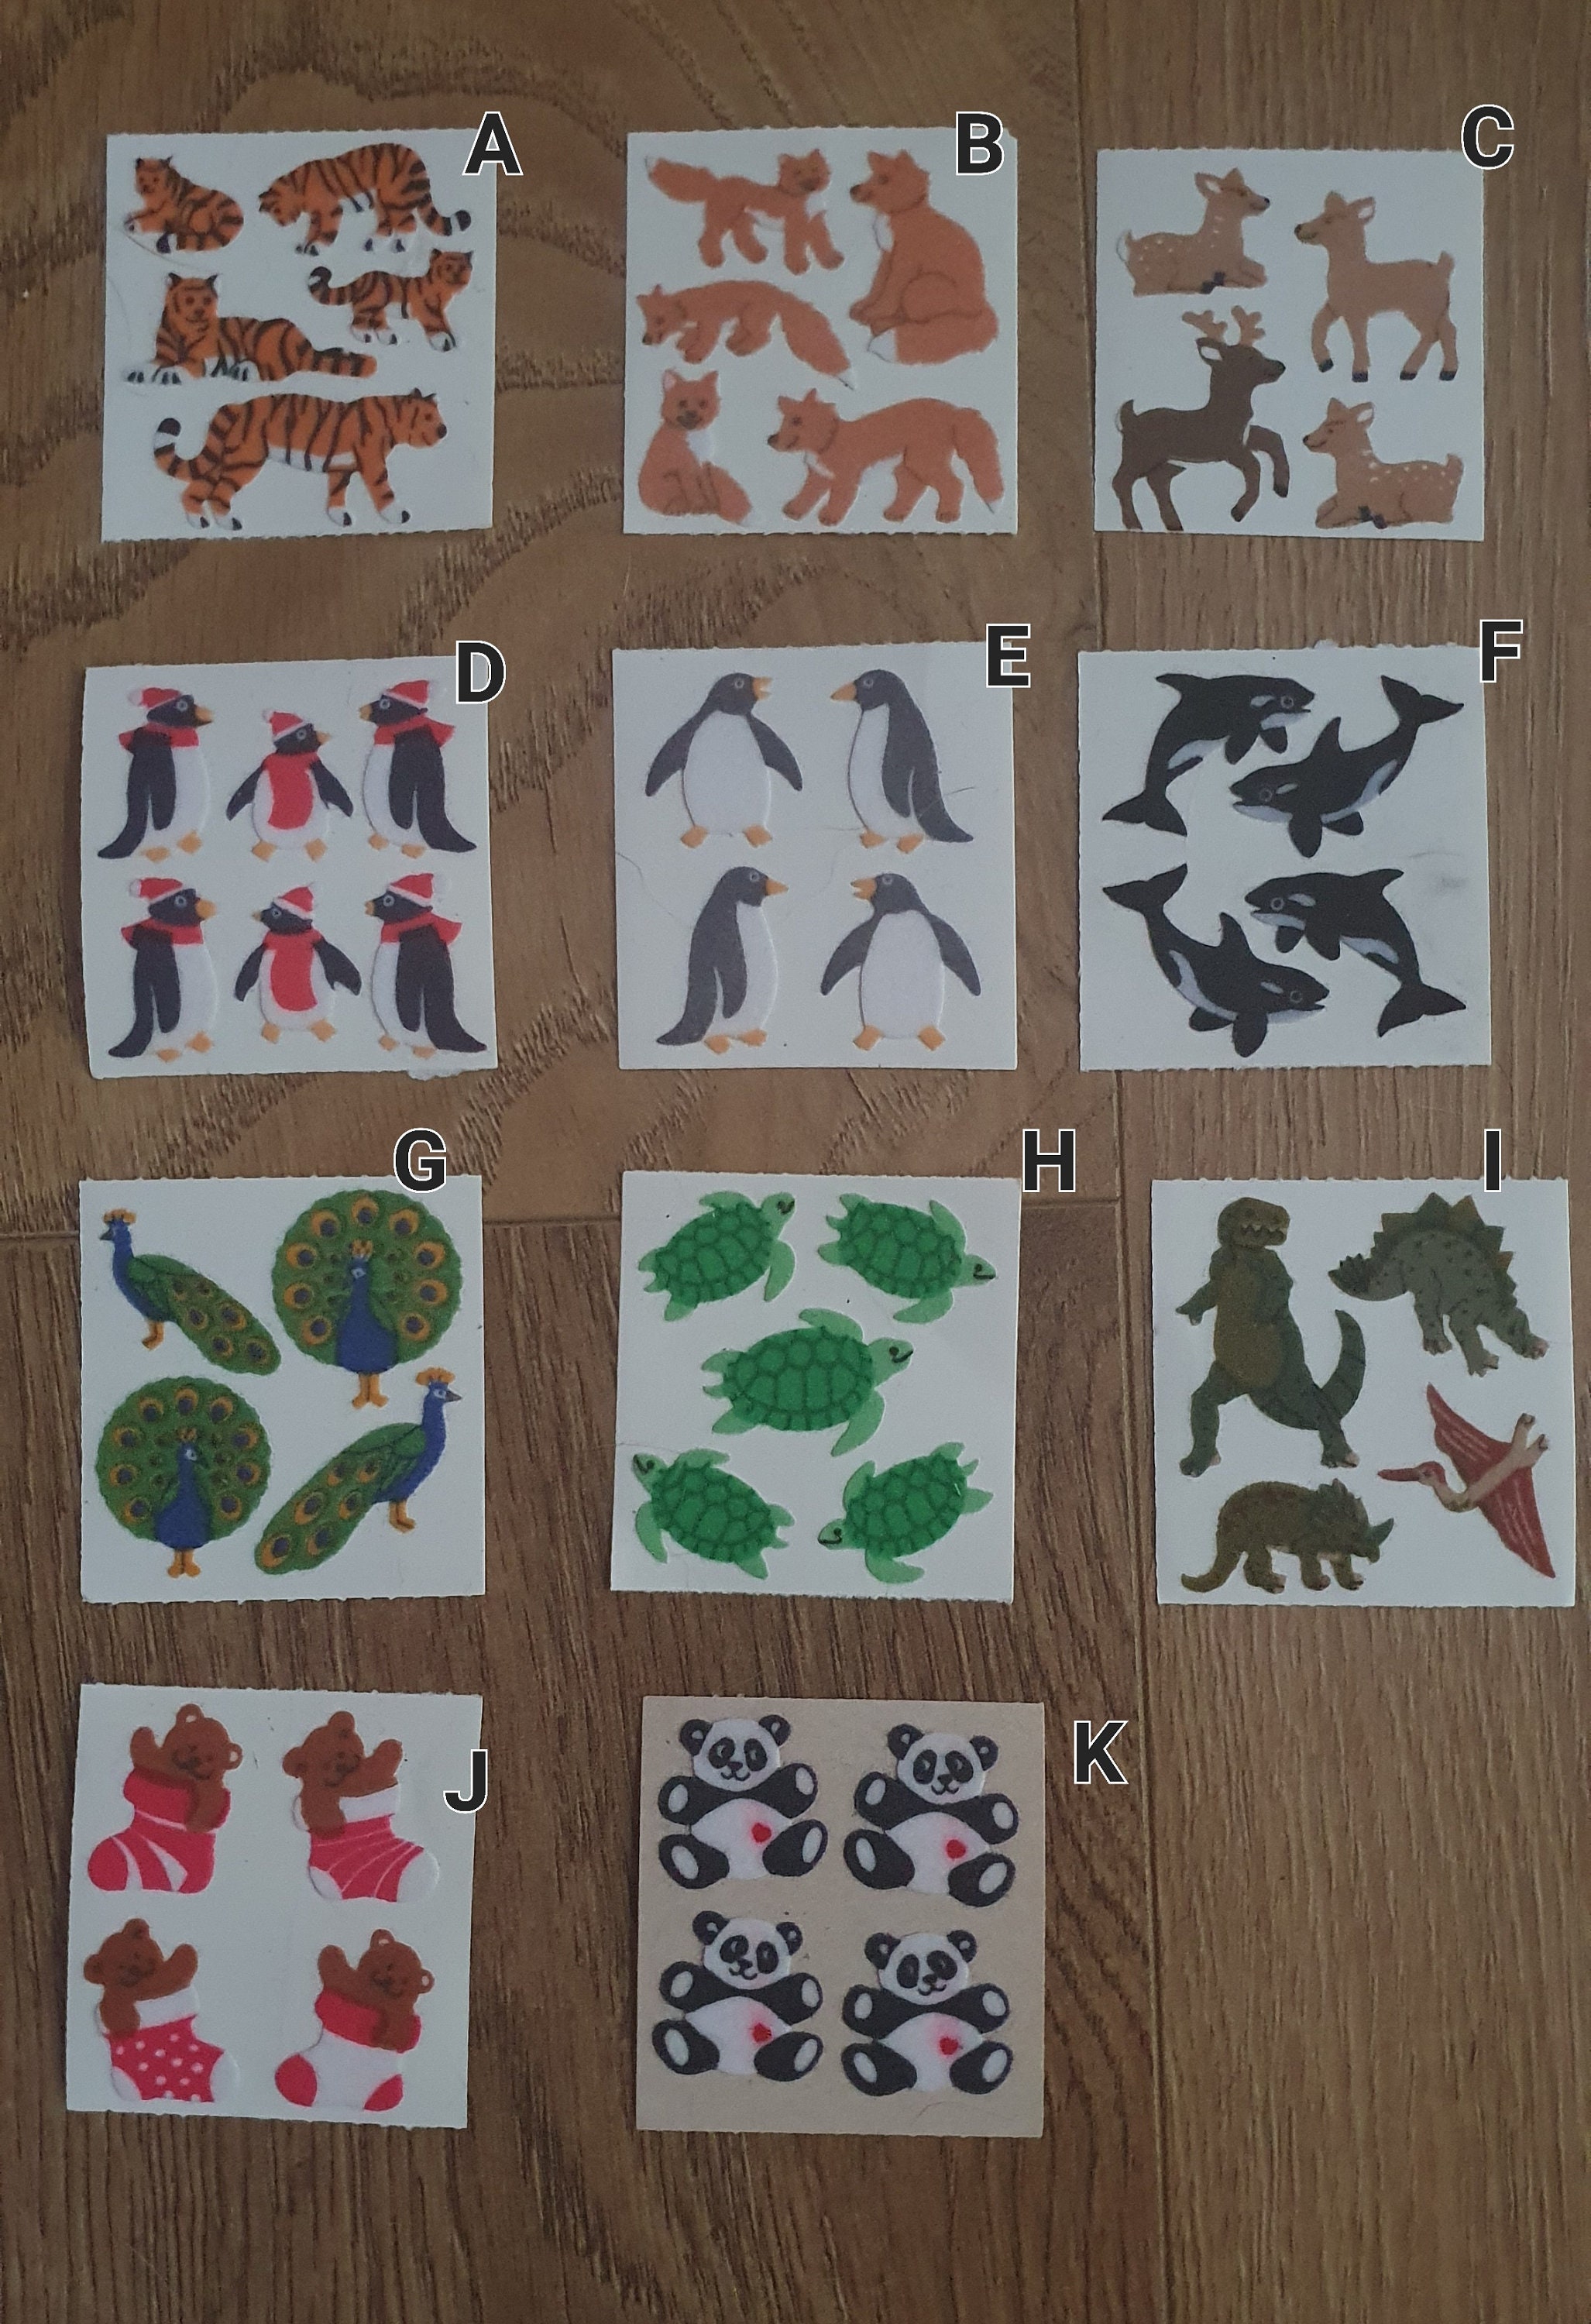 Fuzzy Stickers for Kids Locker Stickers for Girls in Middle School